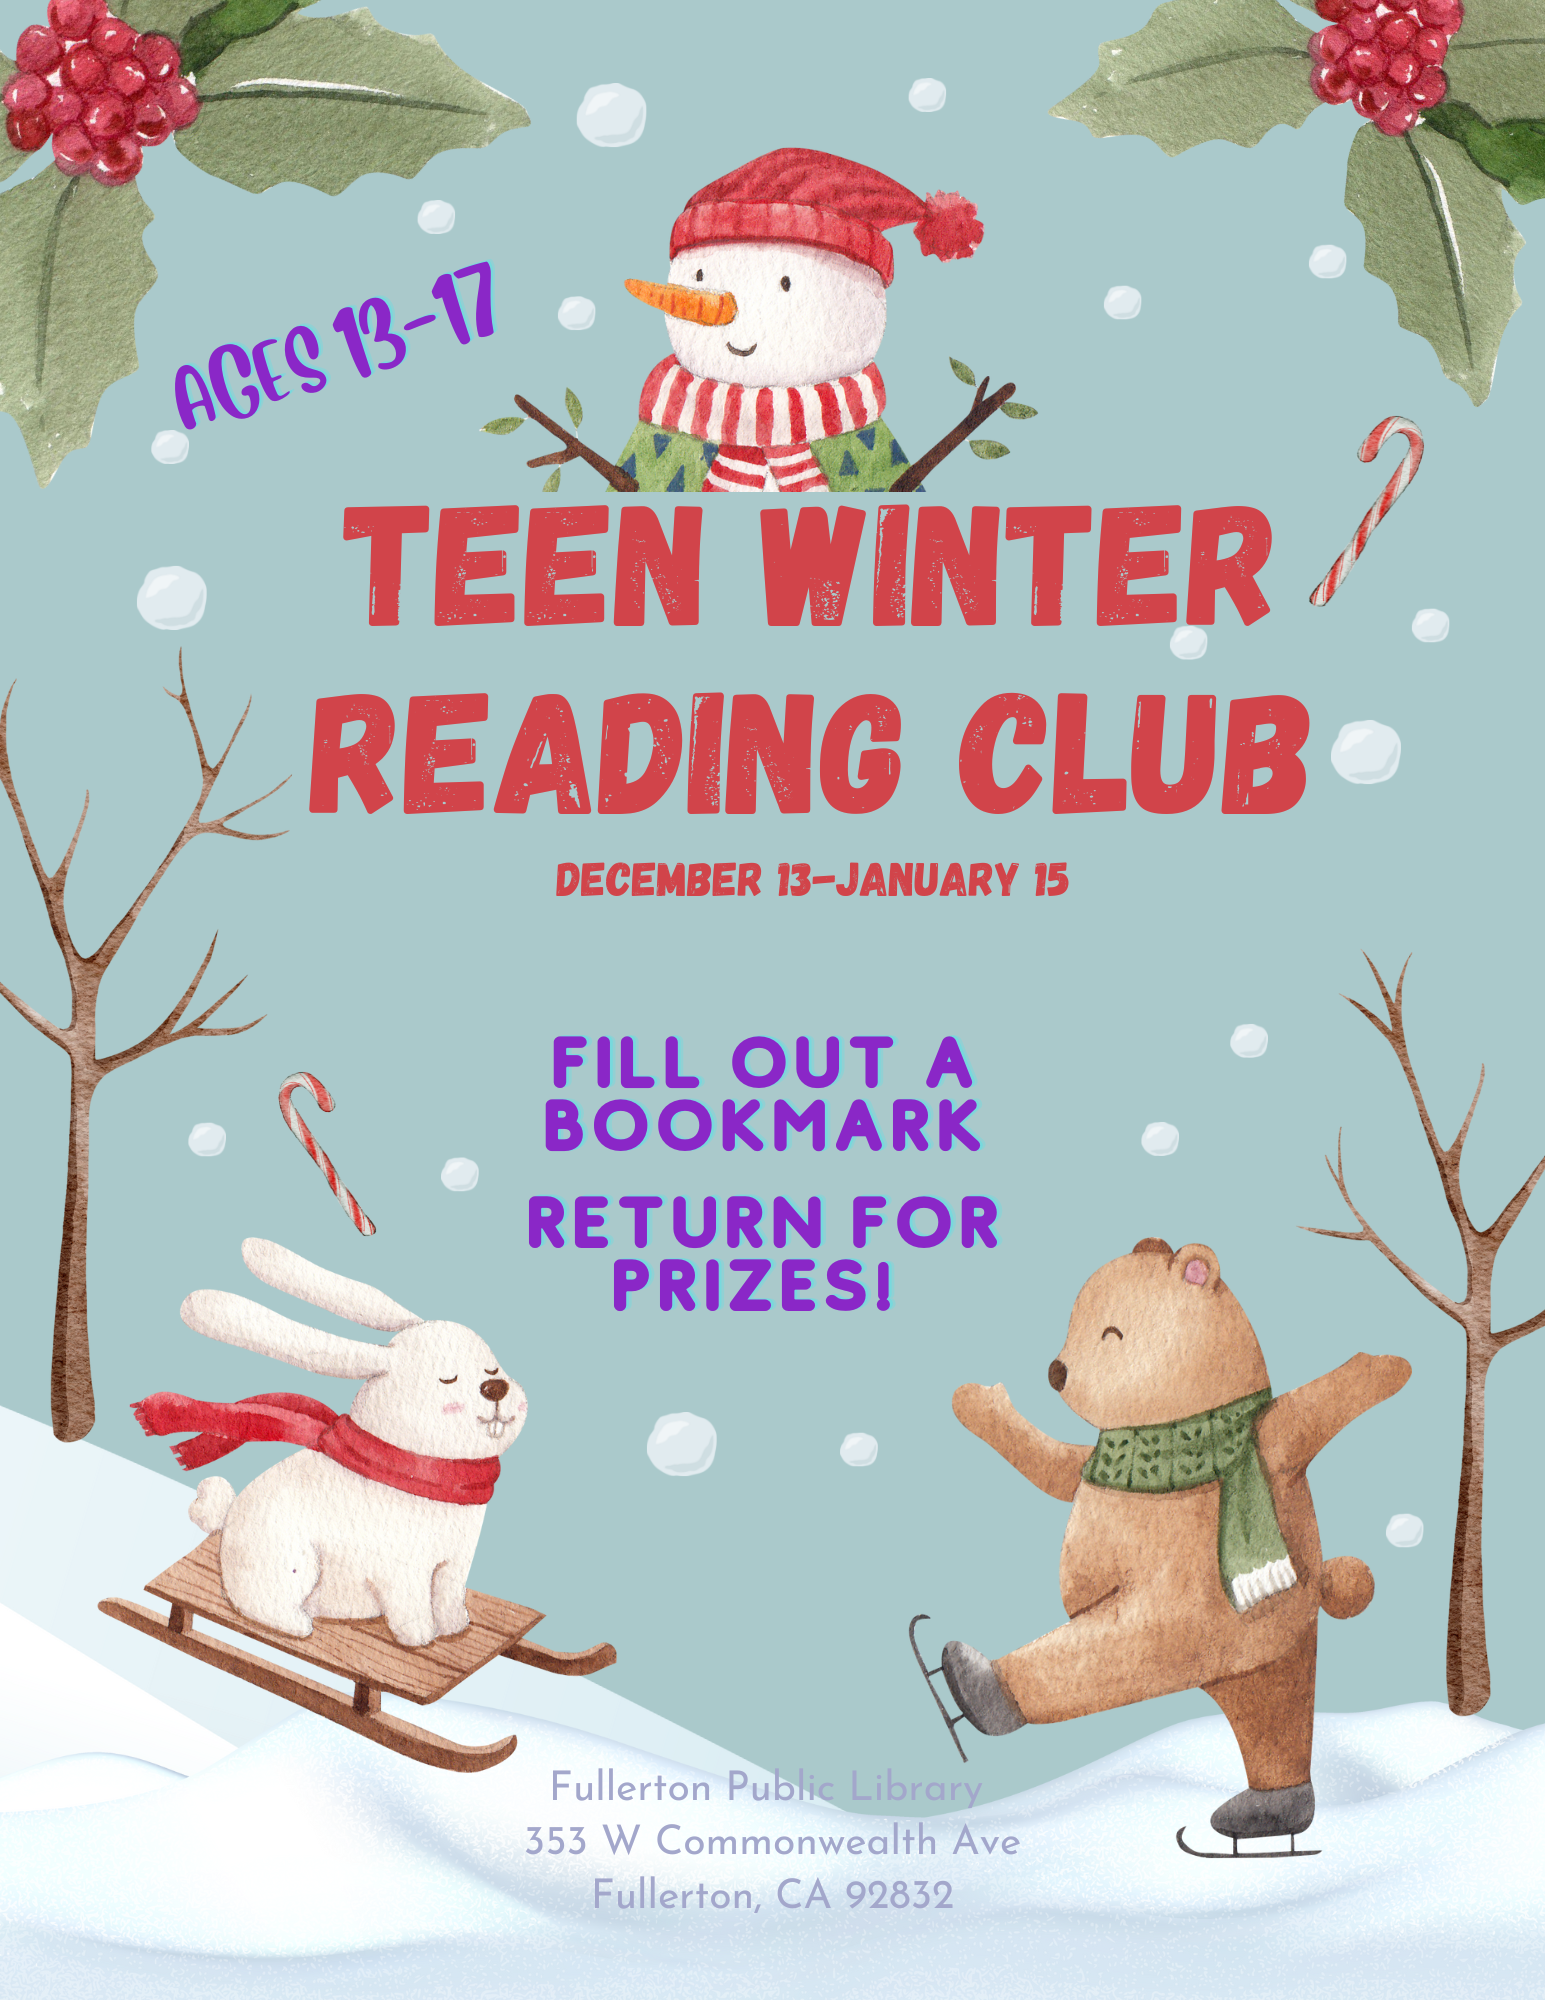 Teen Winter reading program December 13-January 14